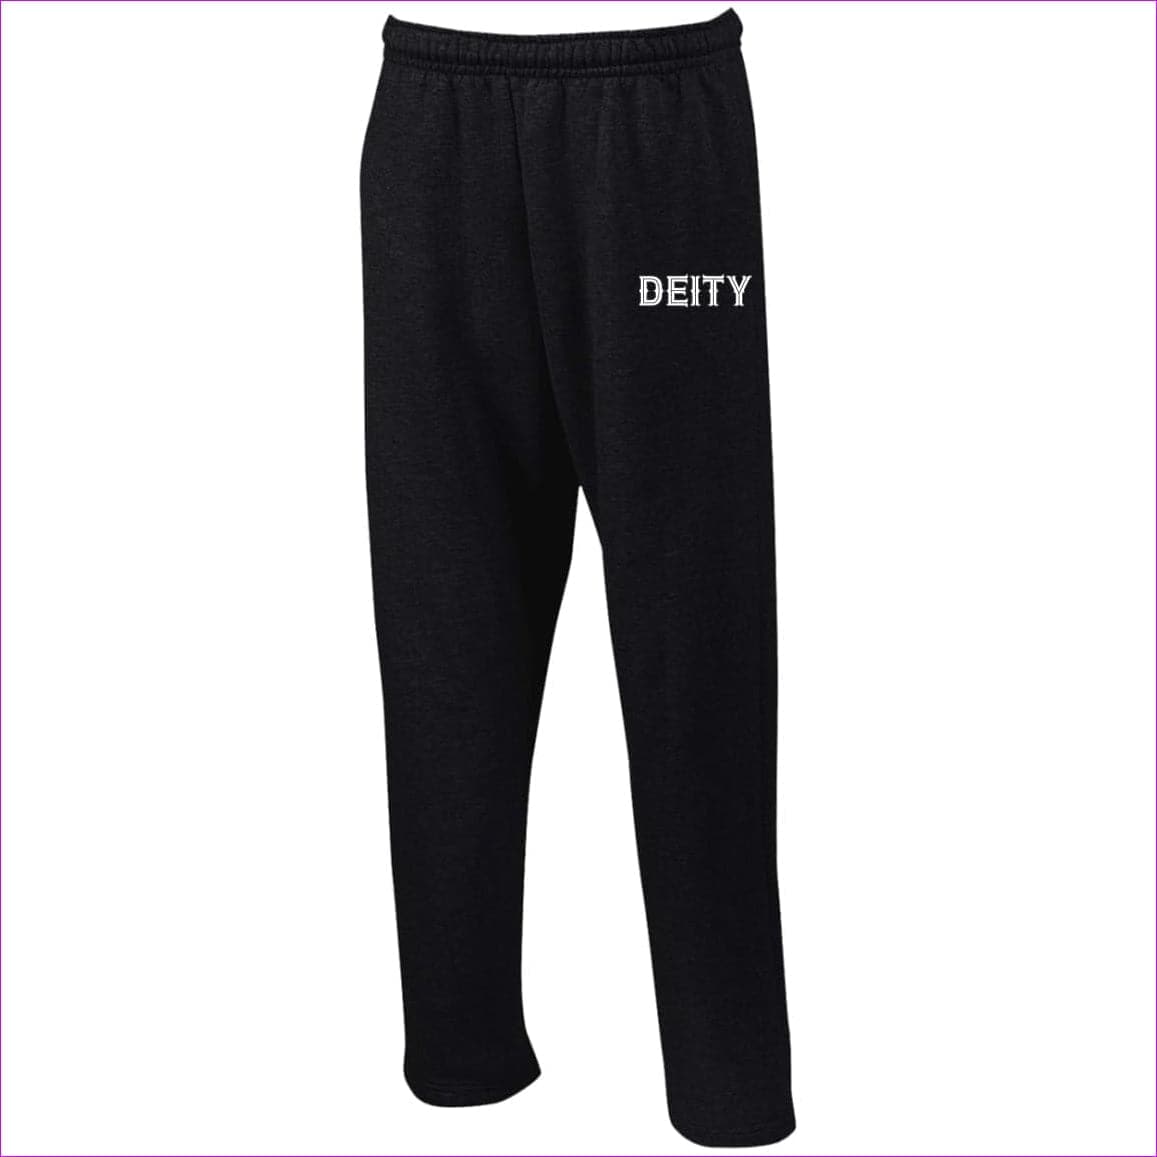 Black - Deity Open Bottom Sweatpants with Pockets - unisex sweatpants at TFC&H Co.